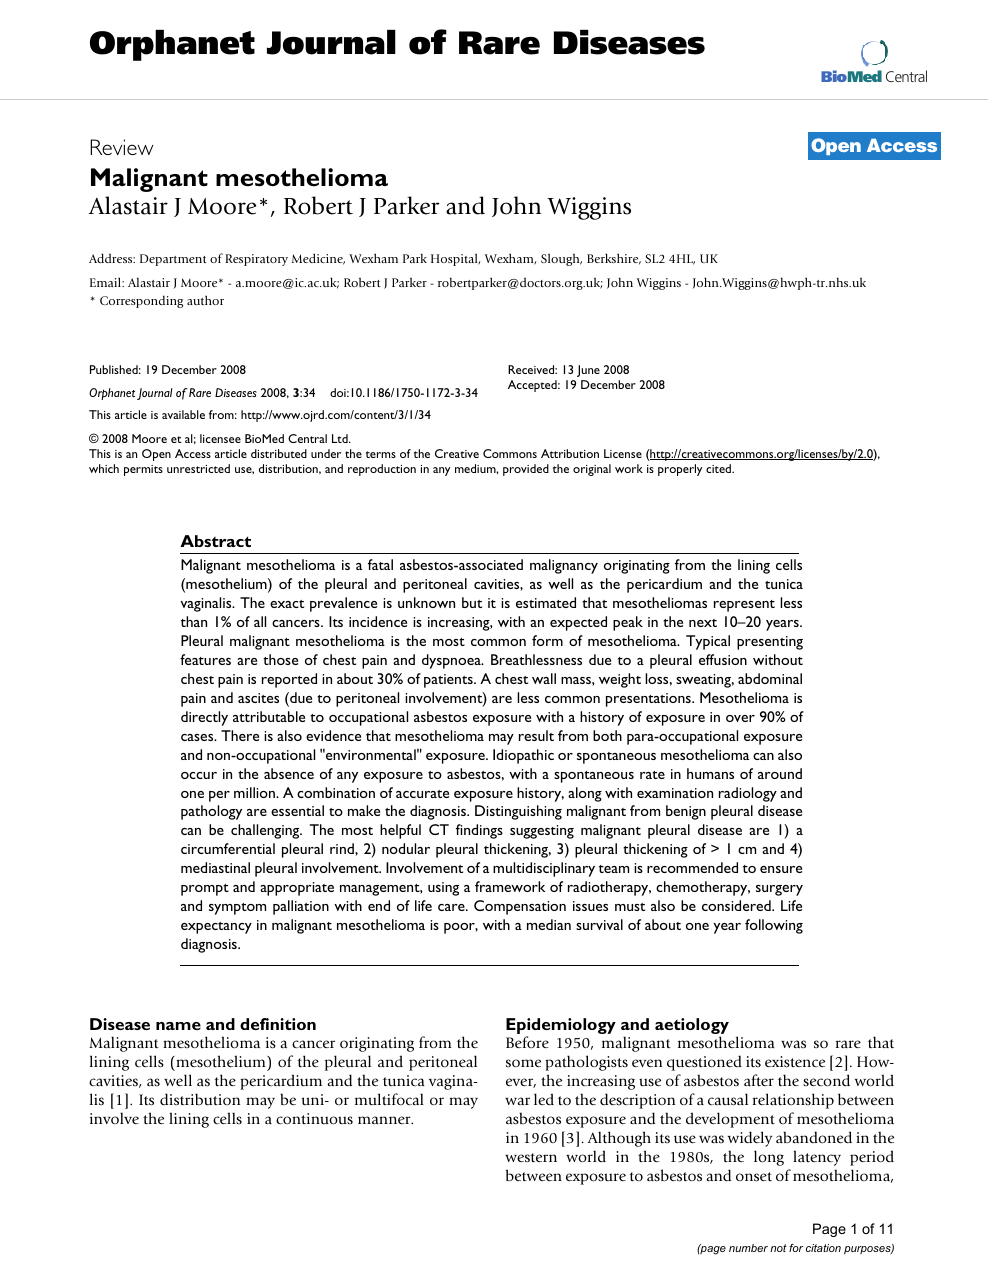 malignant pleural mesothelioma causes